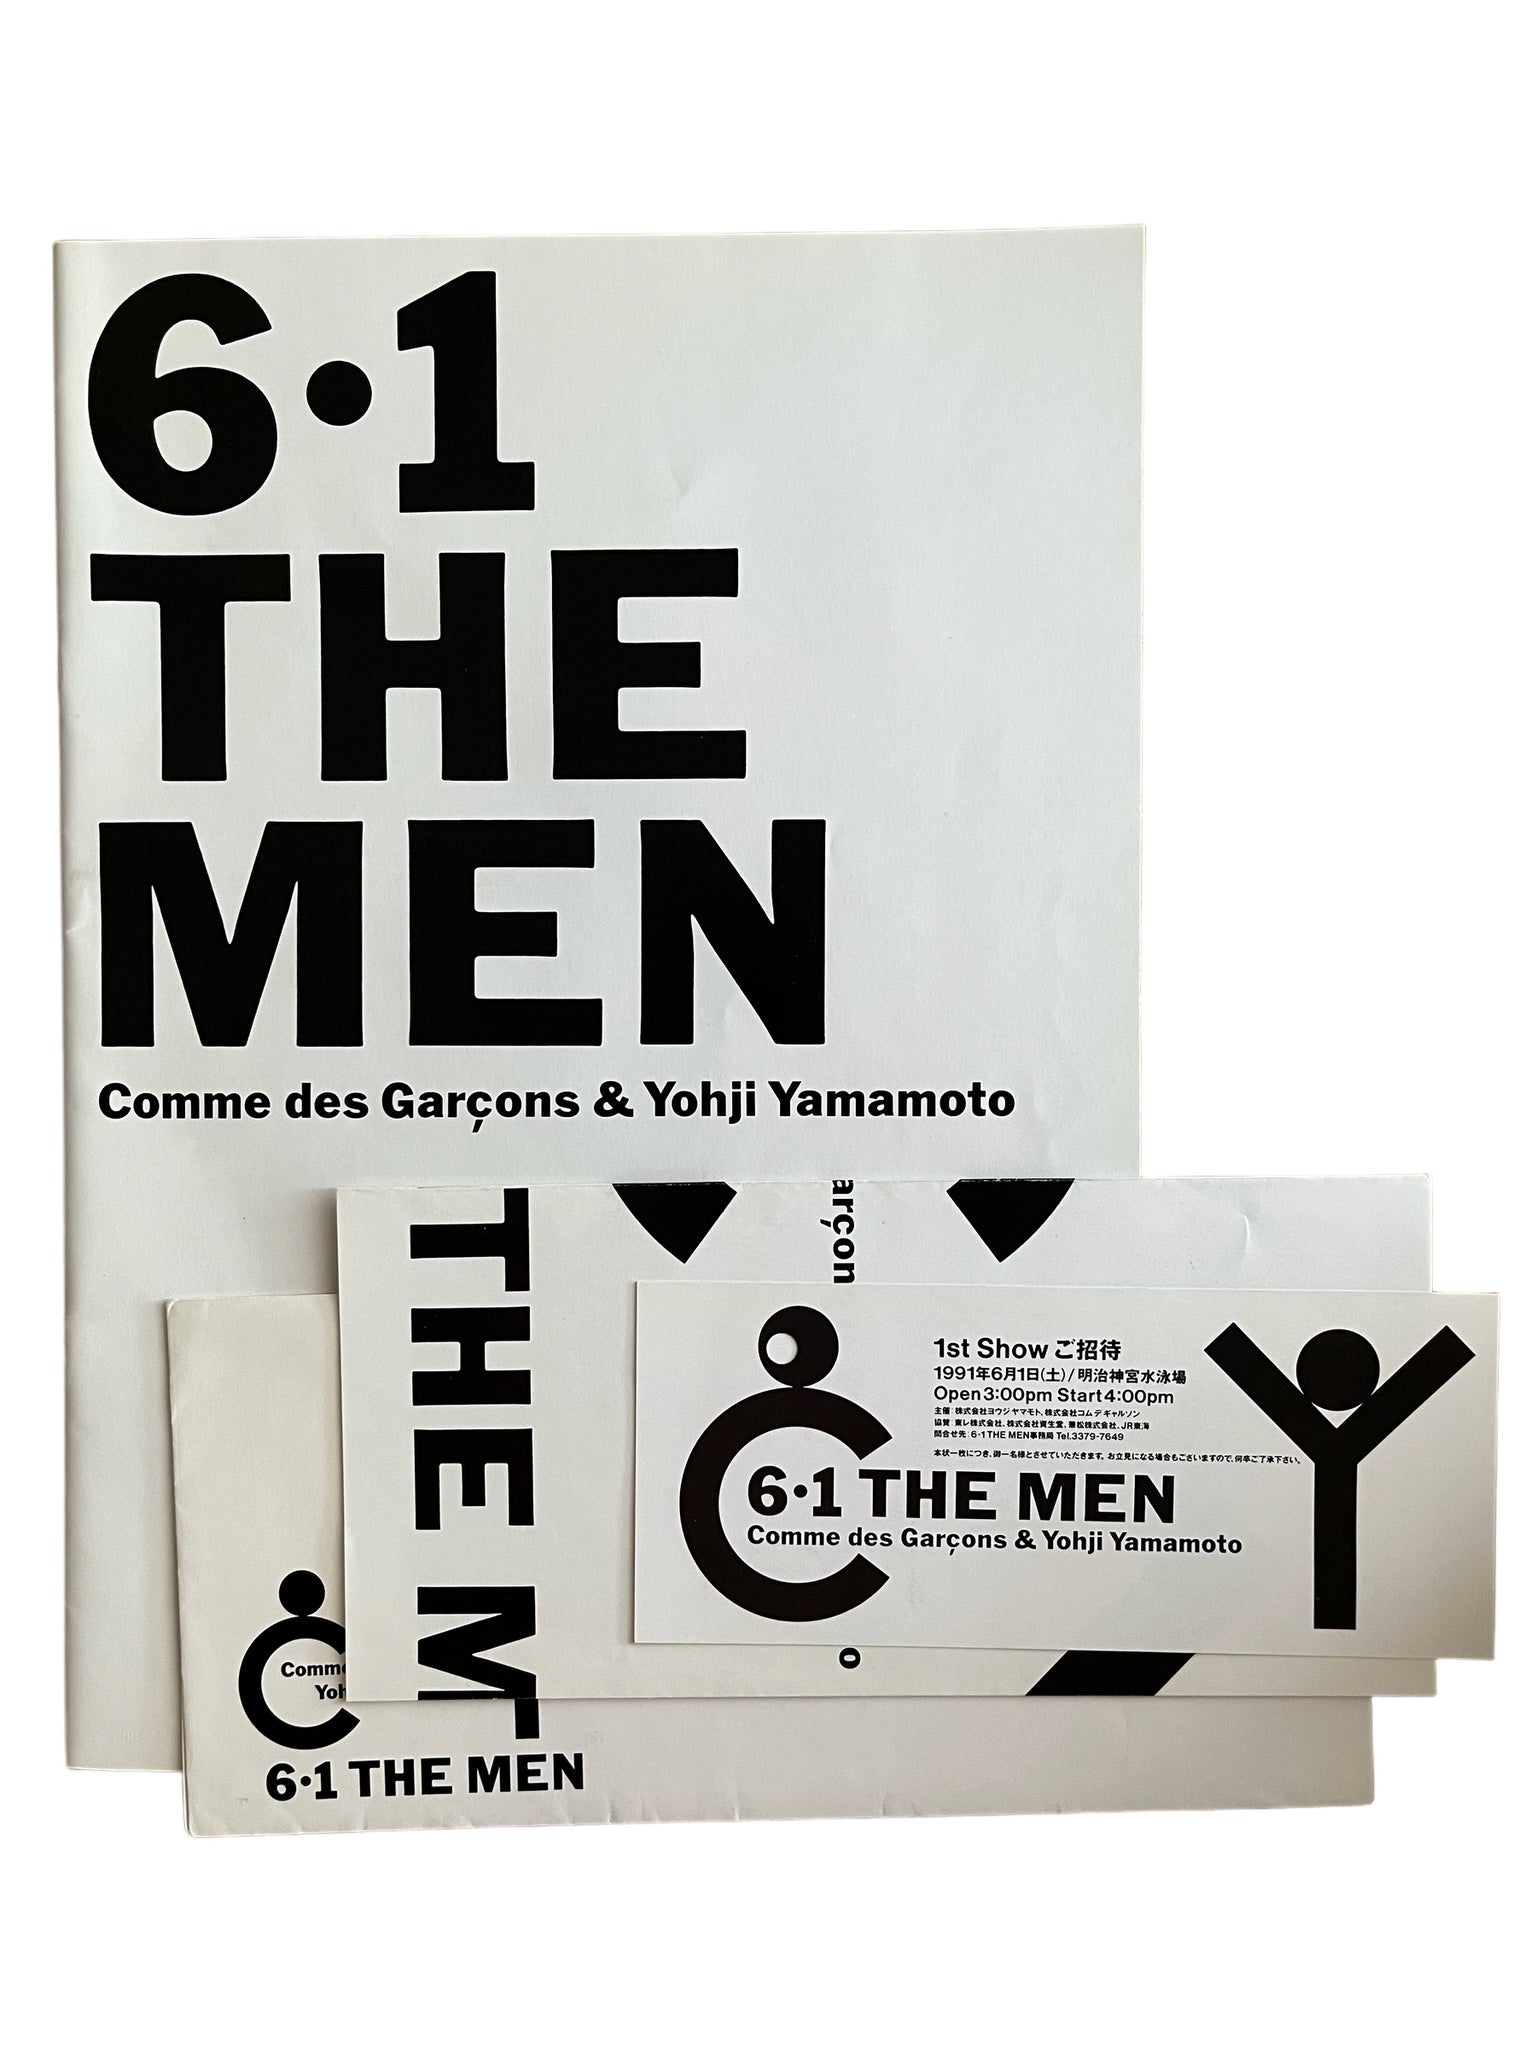 6.1 The Men - Comme des Garçons & Yohji Yamamoto